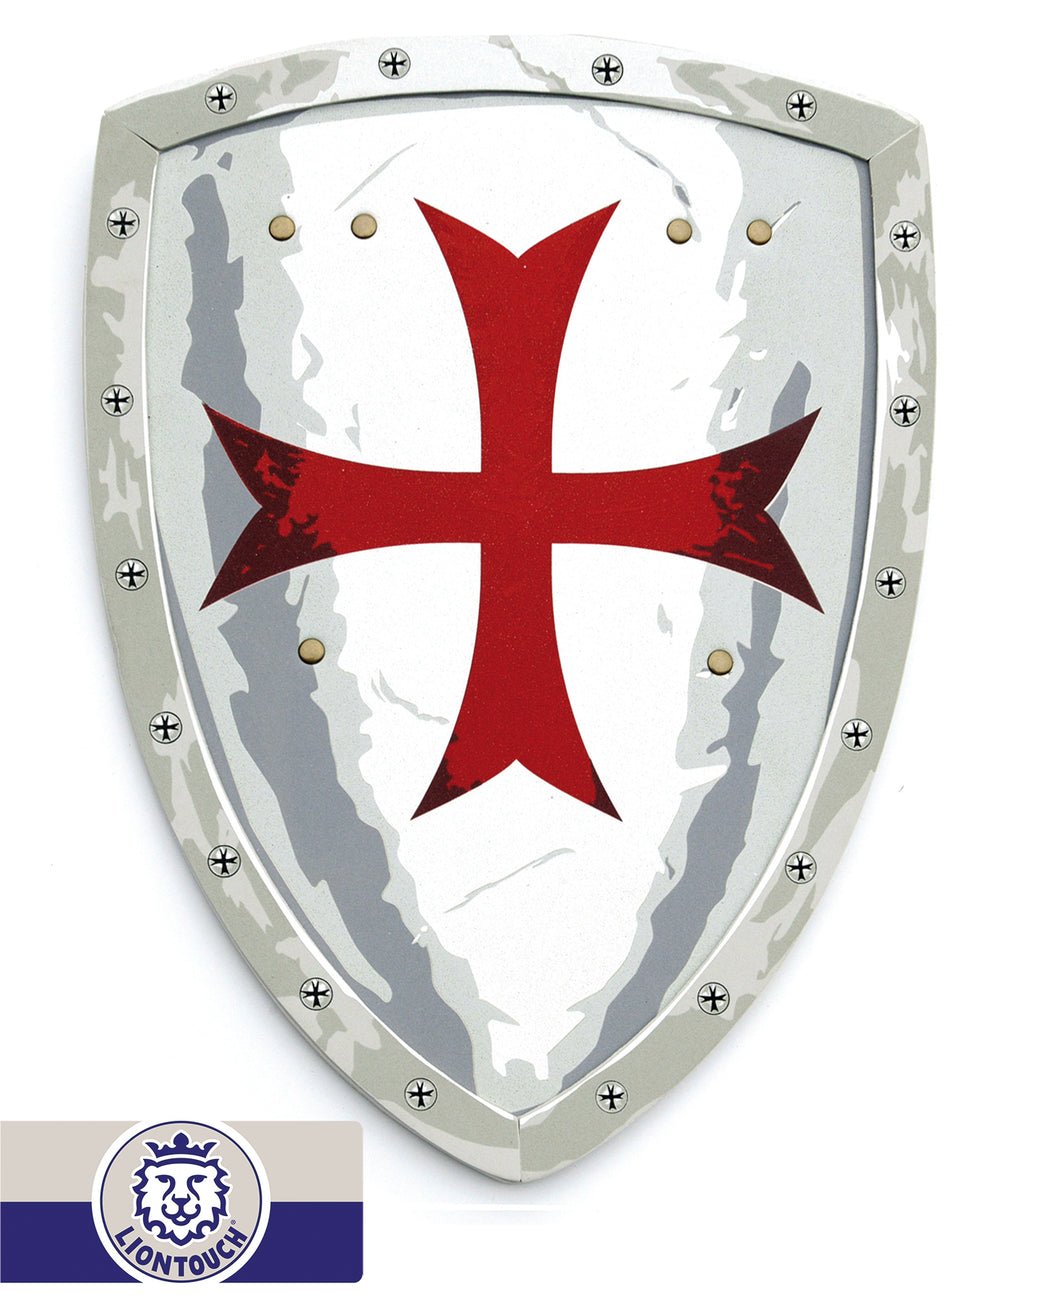 Liontouch Pretend-Play Foam Maltese Knight Small Shield